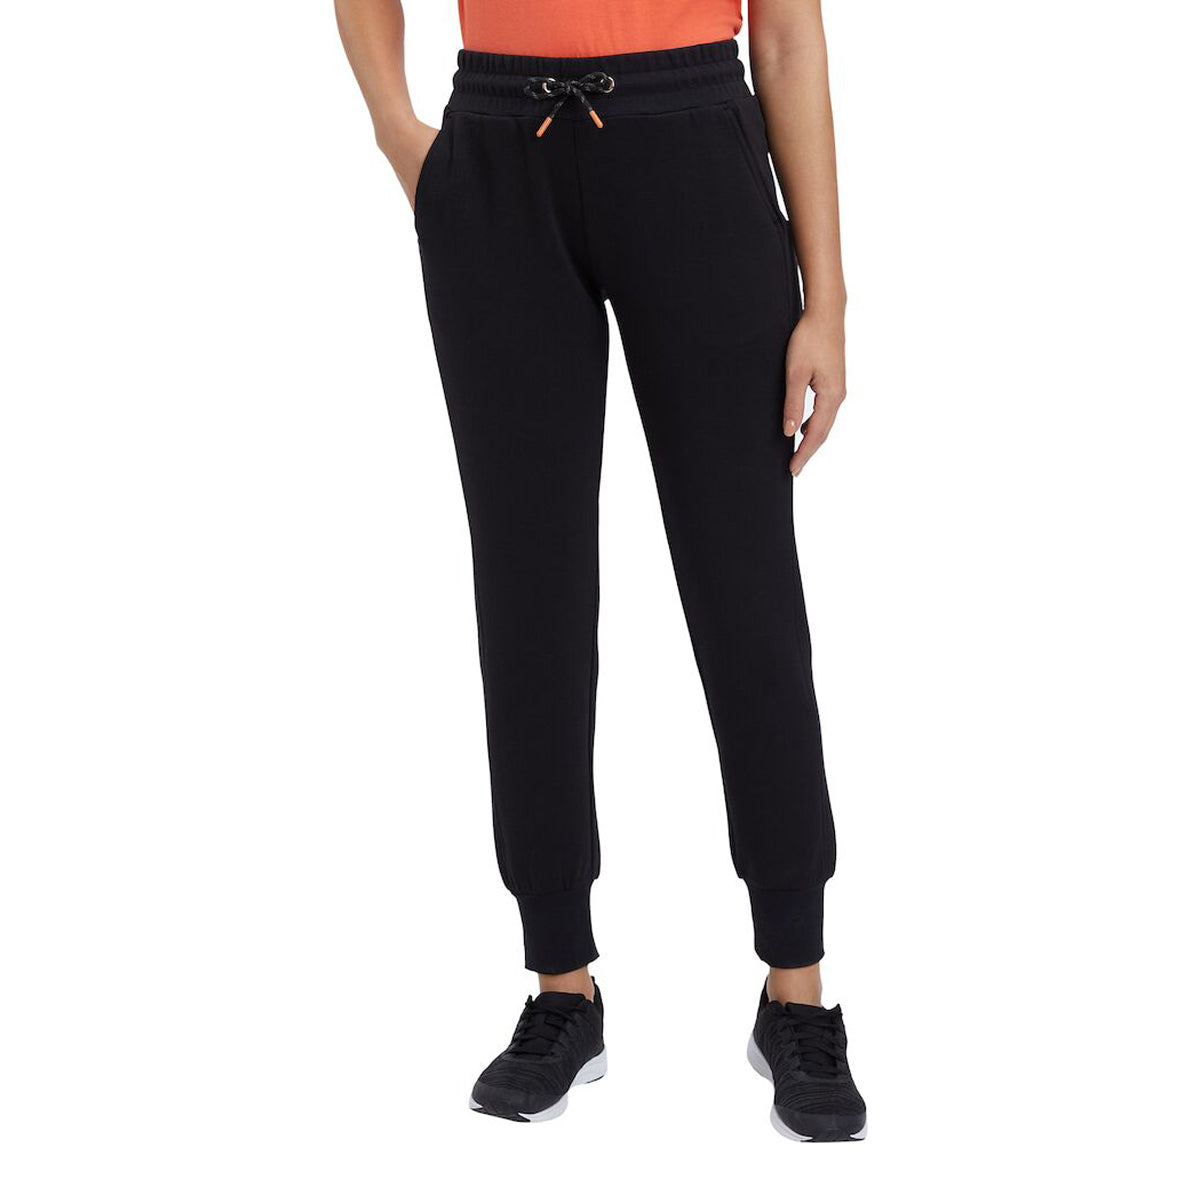 Energetics Lexia Casual Sweatpants For Women, Black